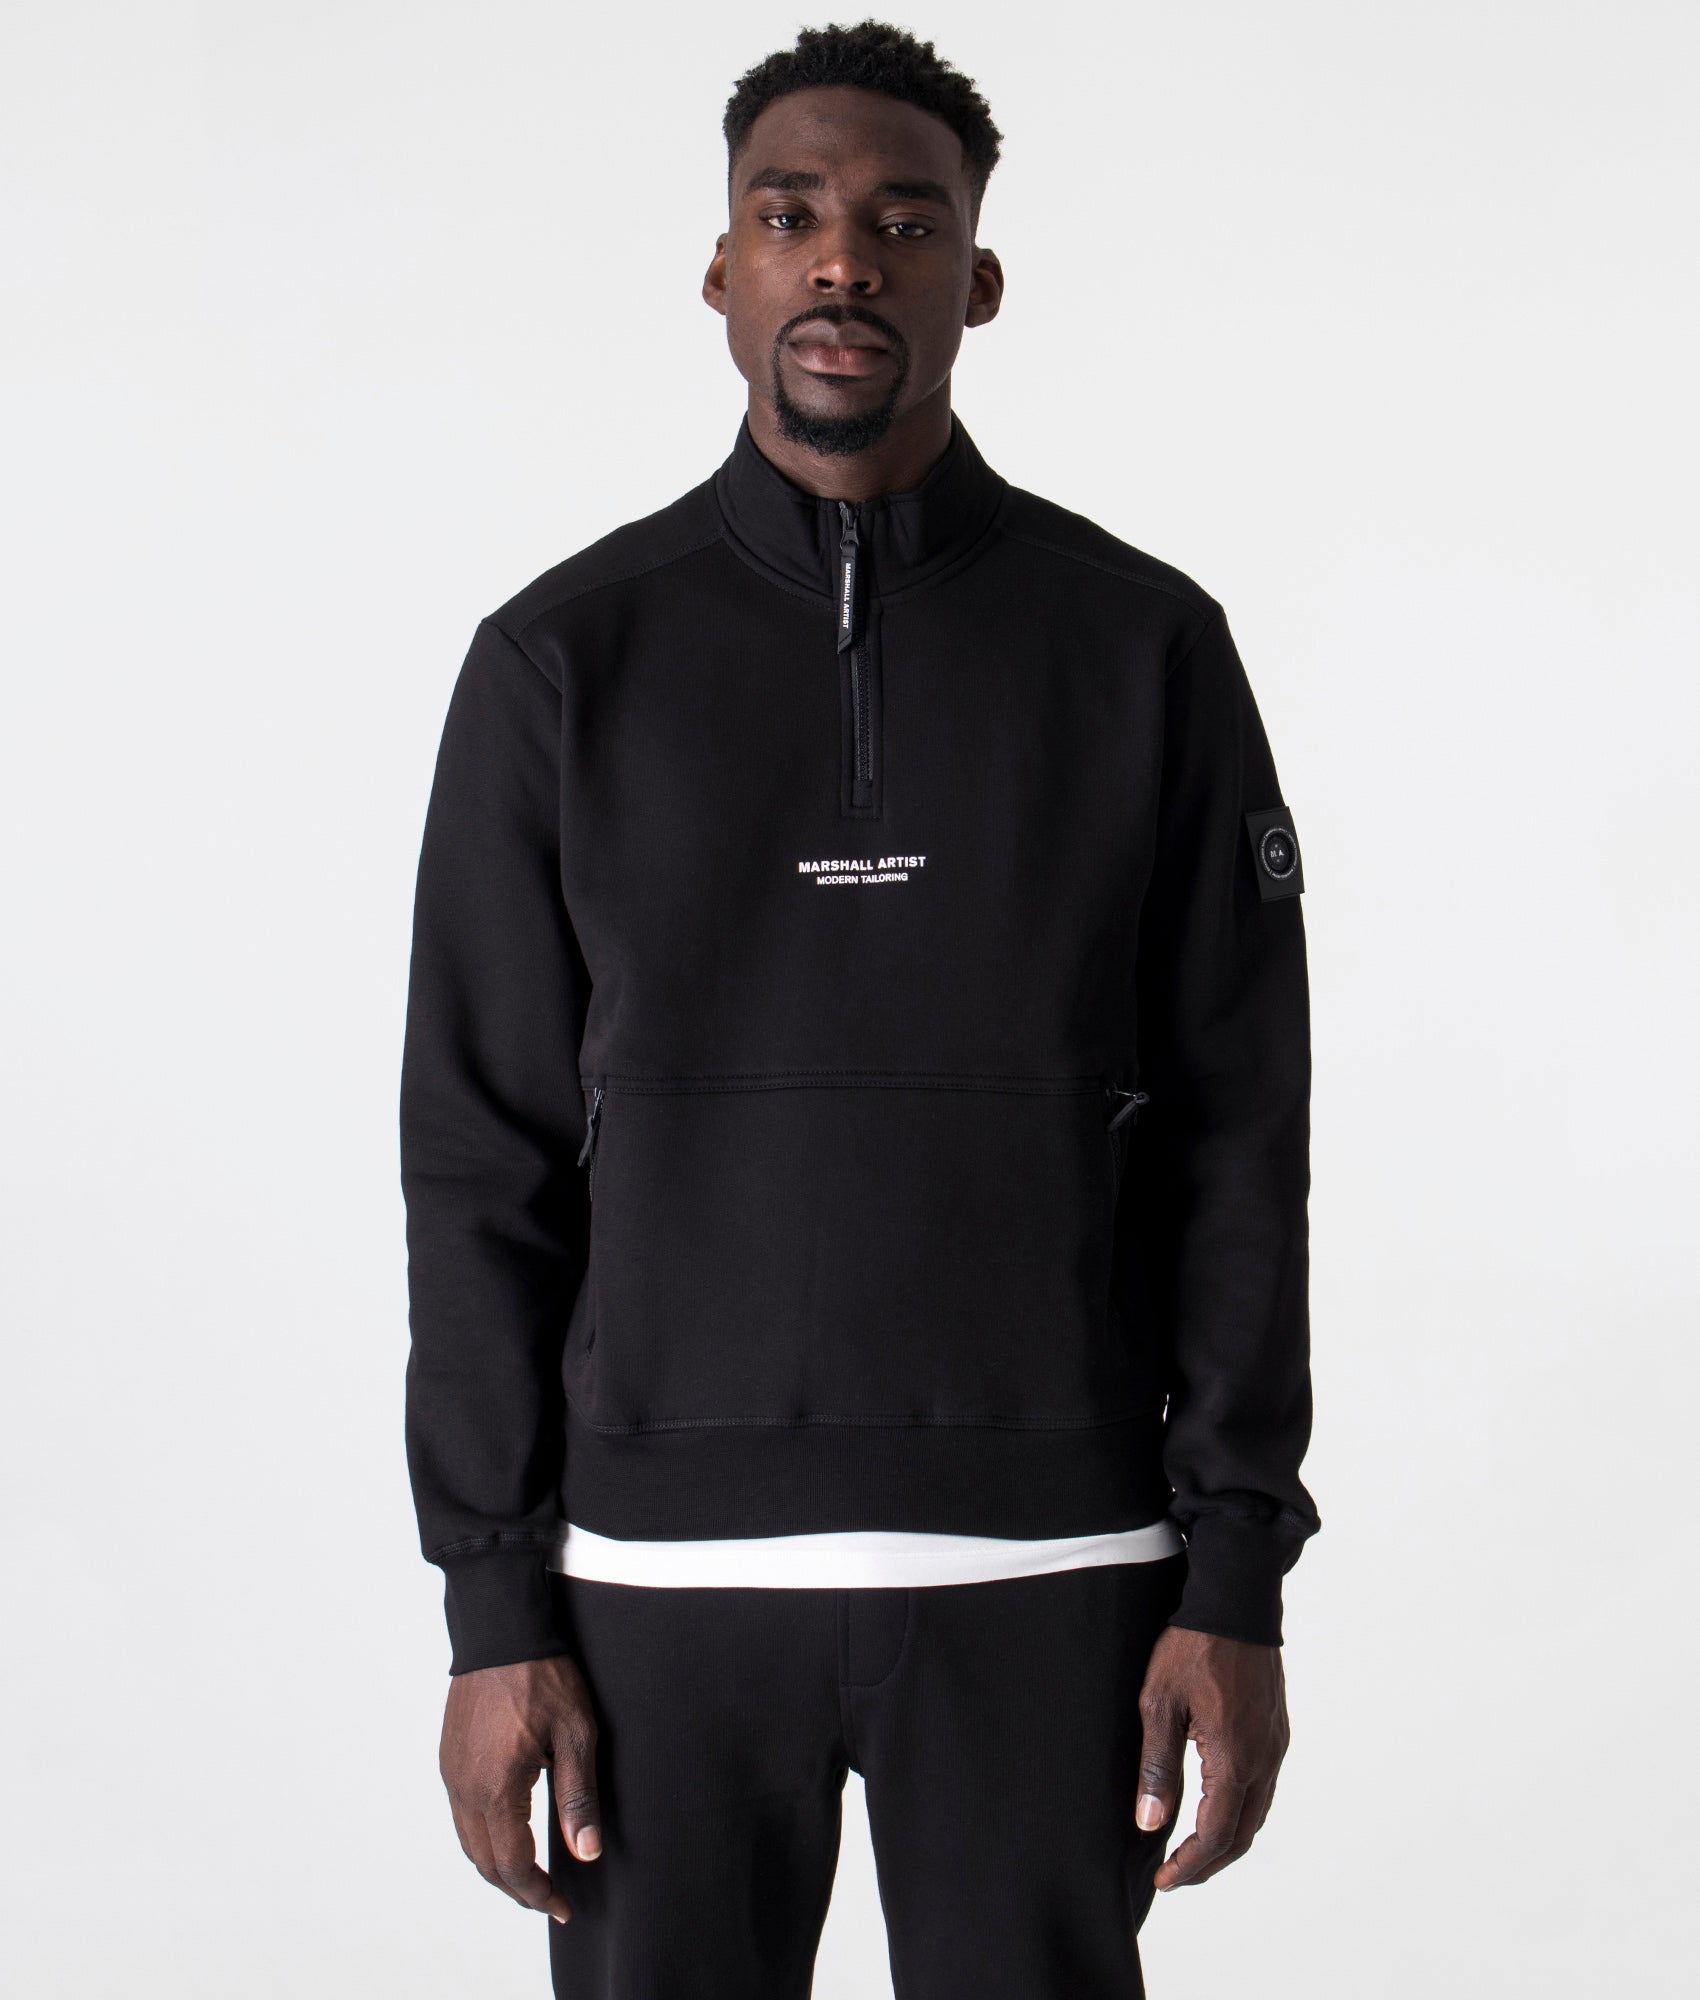 Marshall Artist Mens Siren Quarter Zip Sweatshirt - Colour: 001 Black - Size: Large